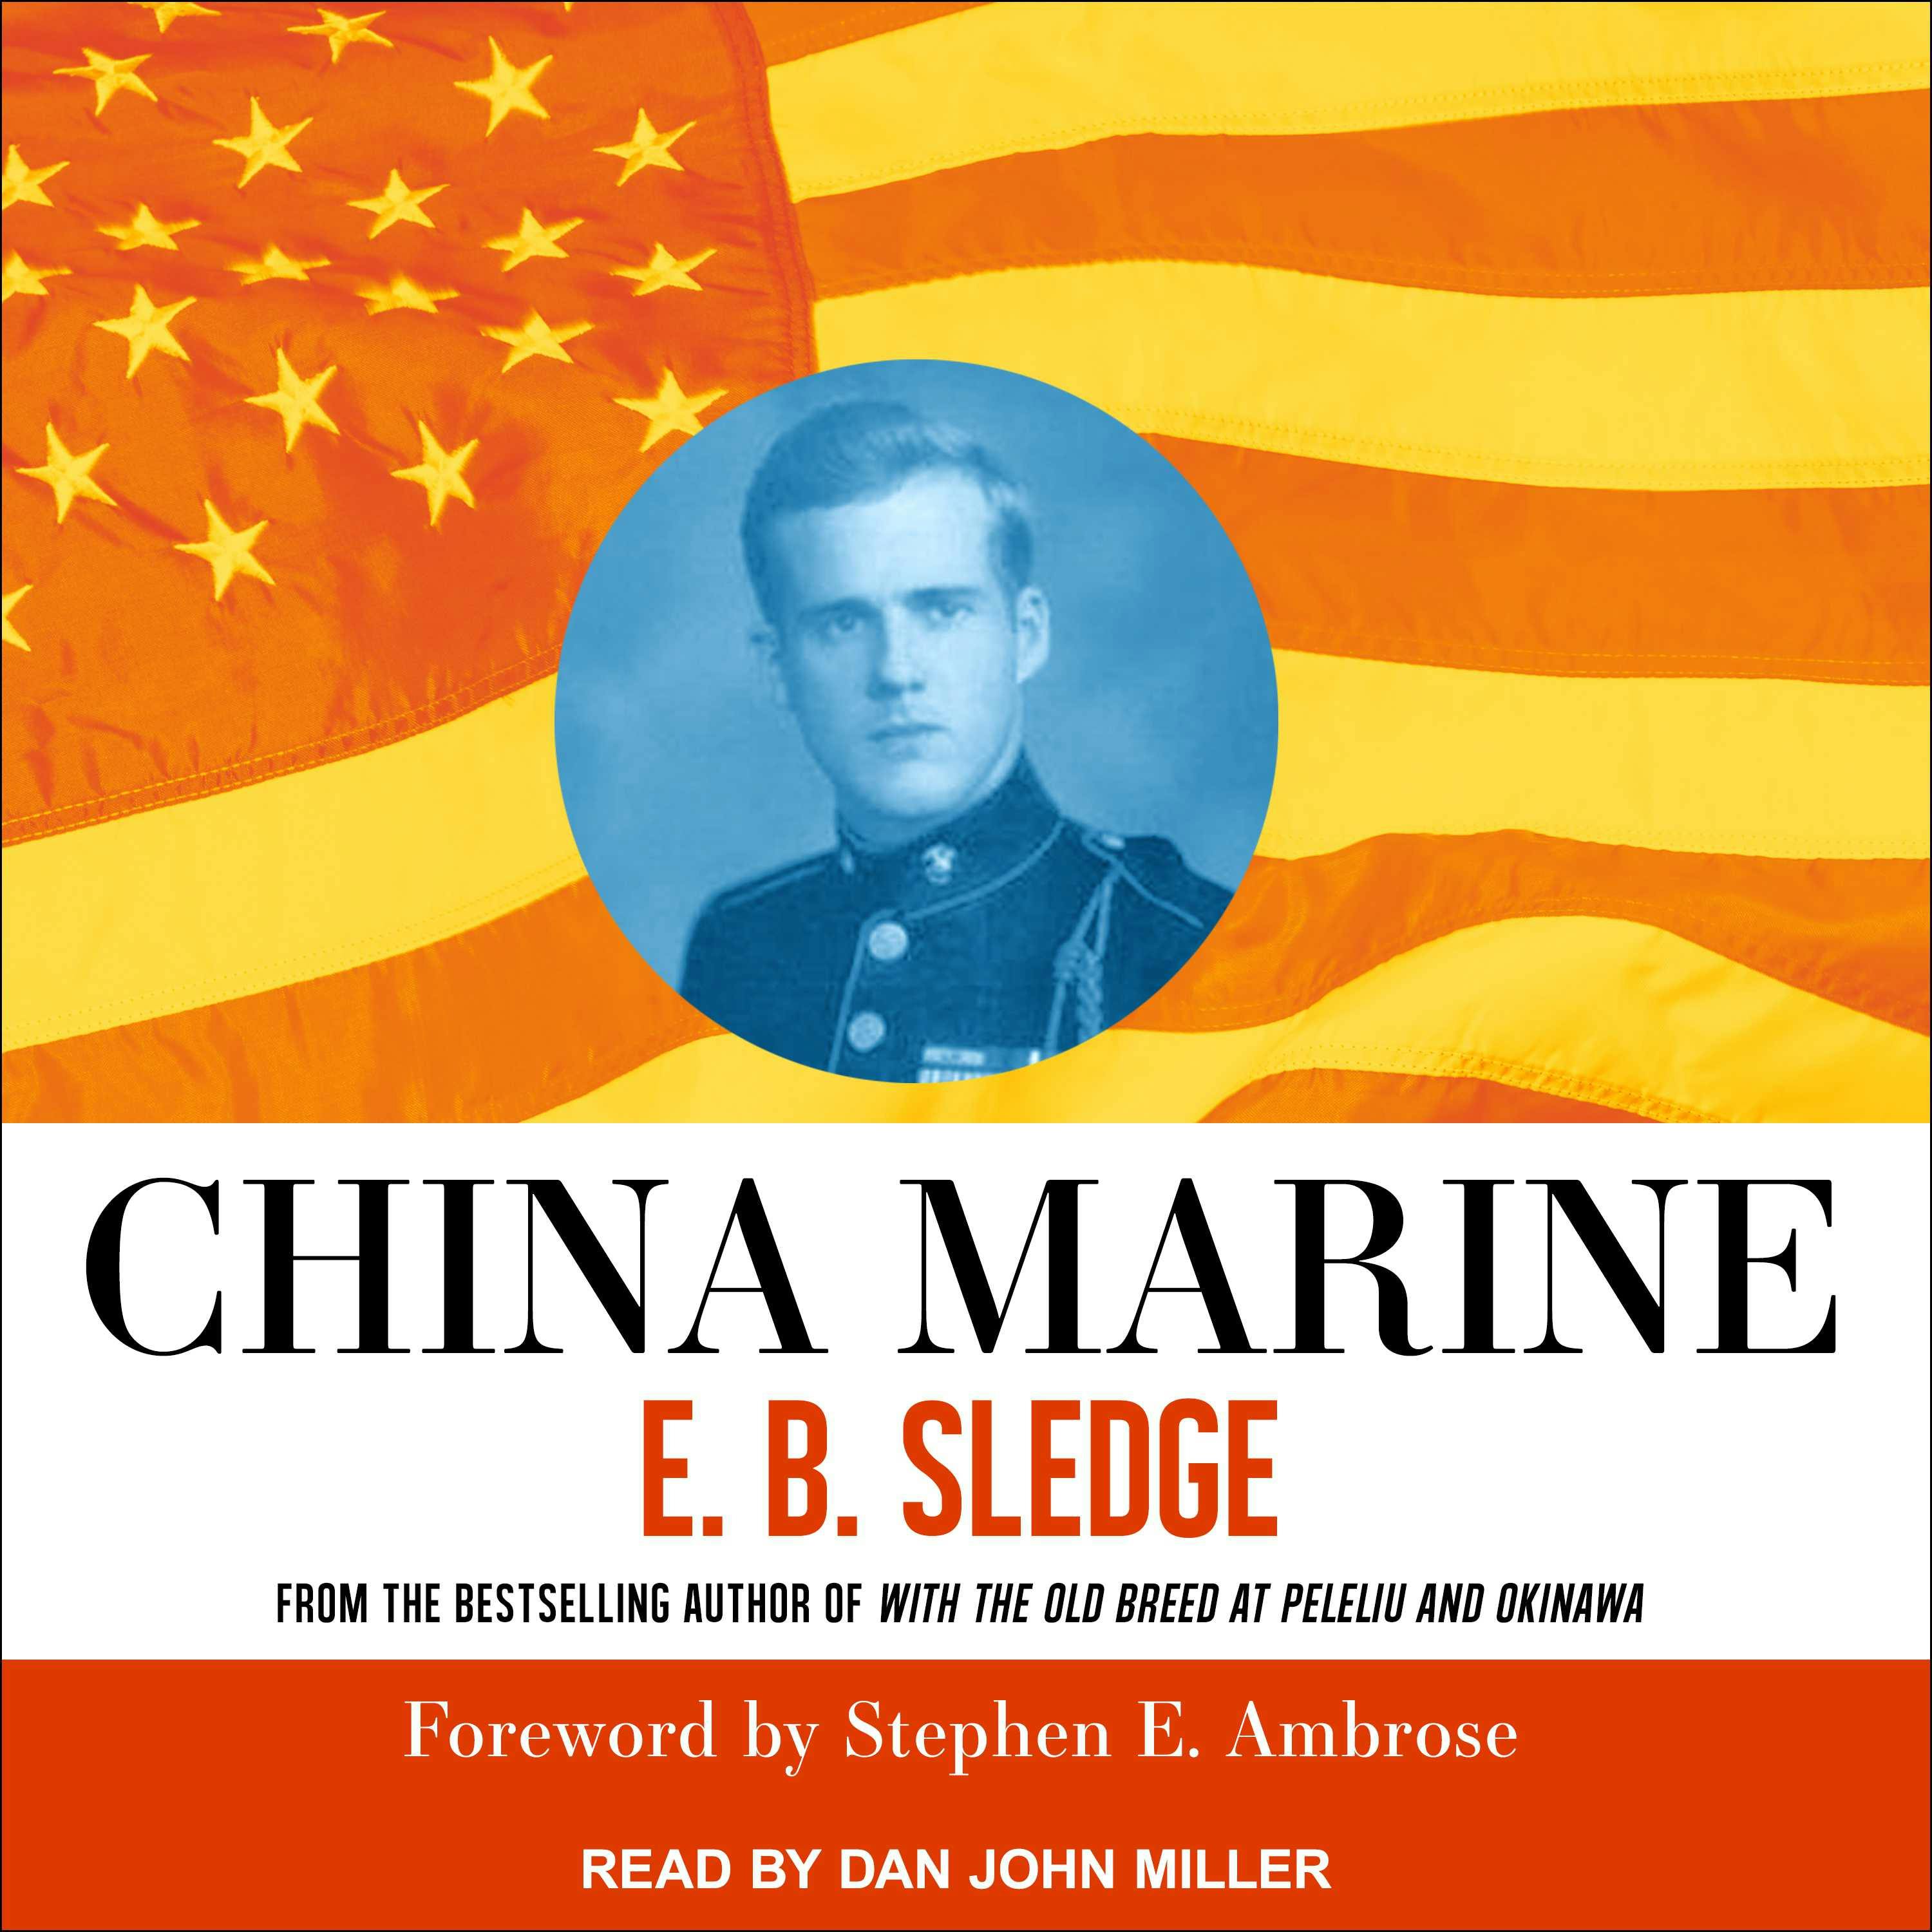 China Marine: An Infantryman's Life After World War II - Stephen E. Ambrose, E.B. Sledge